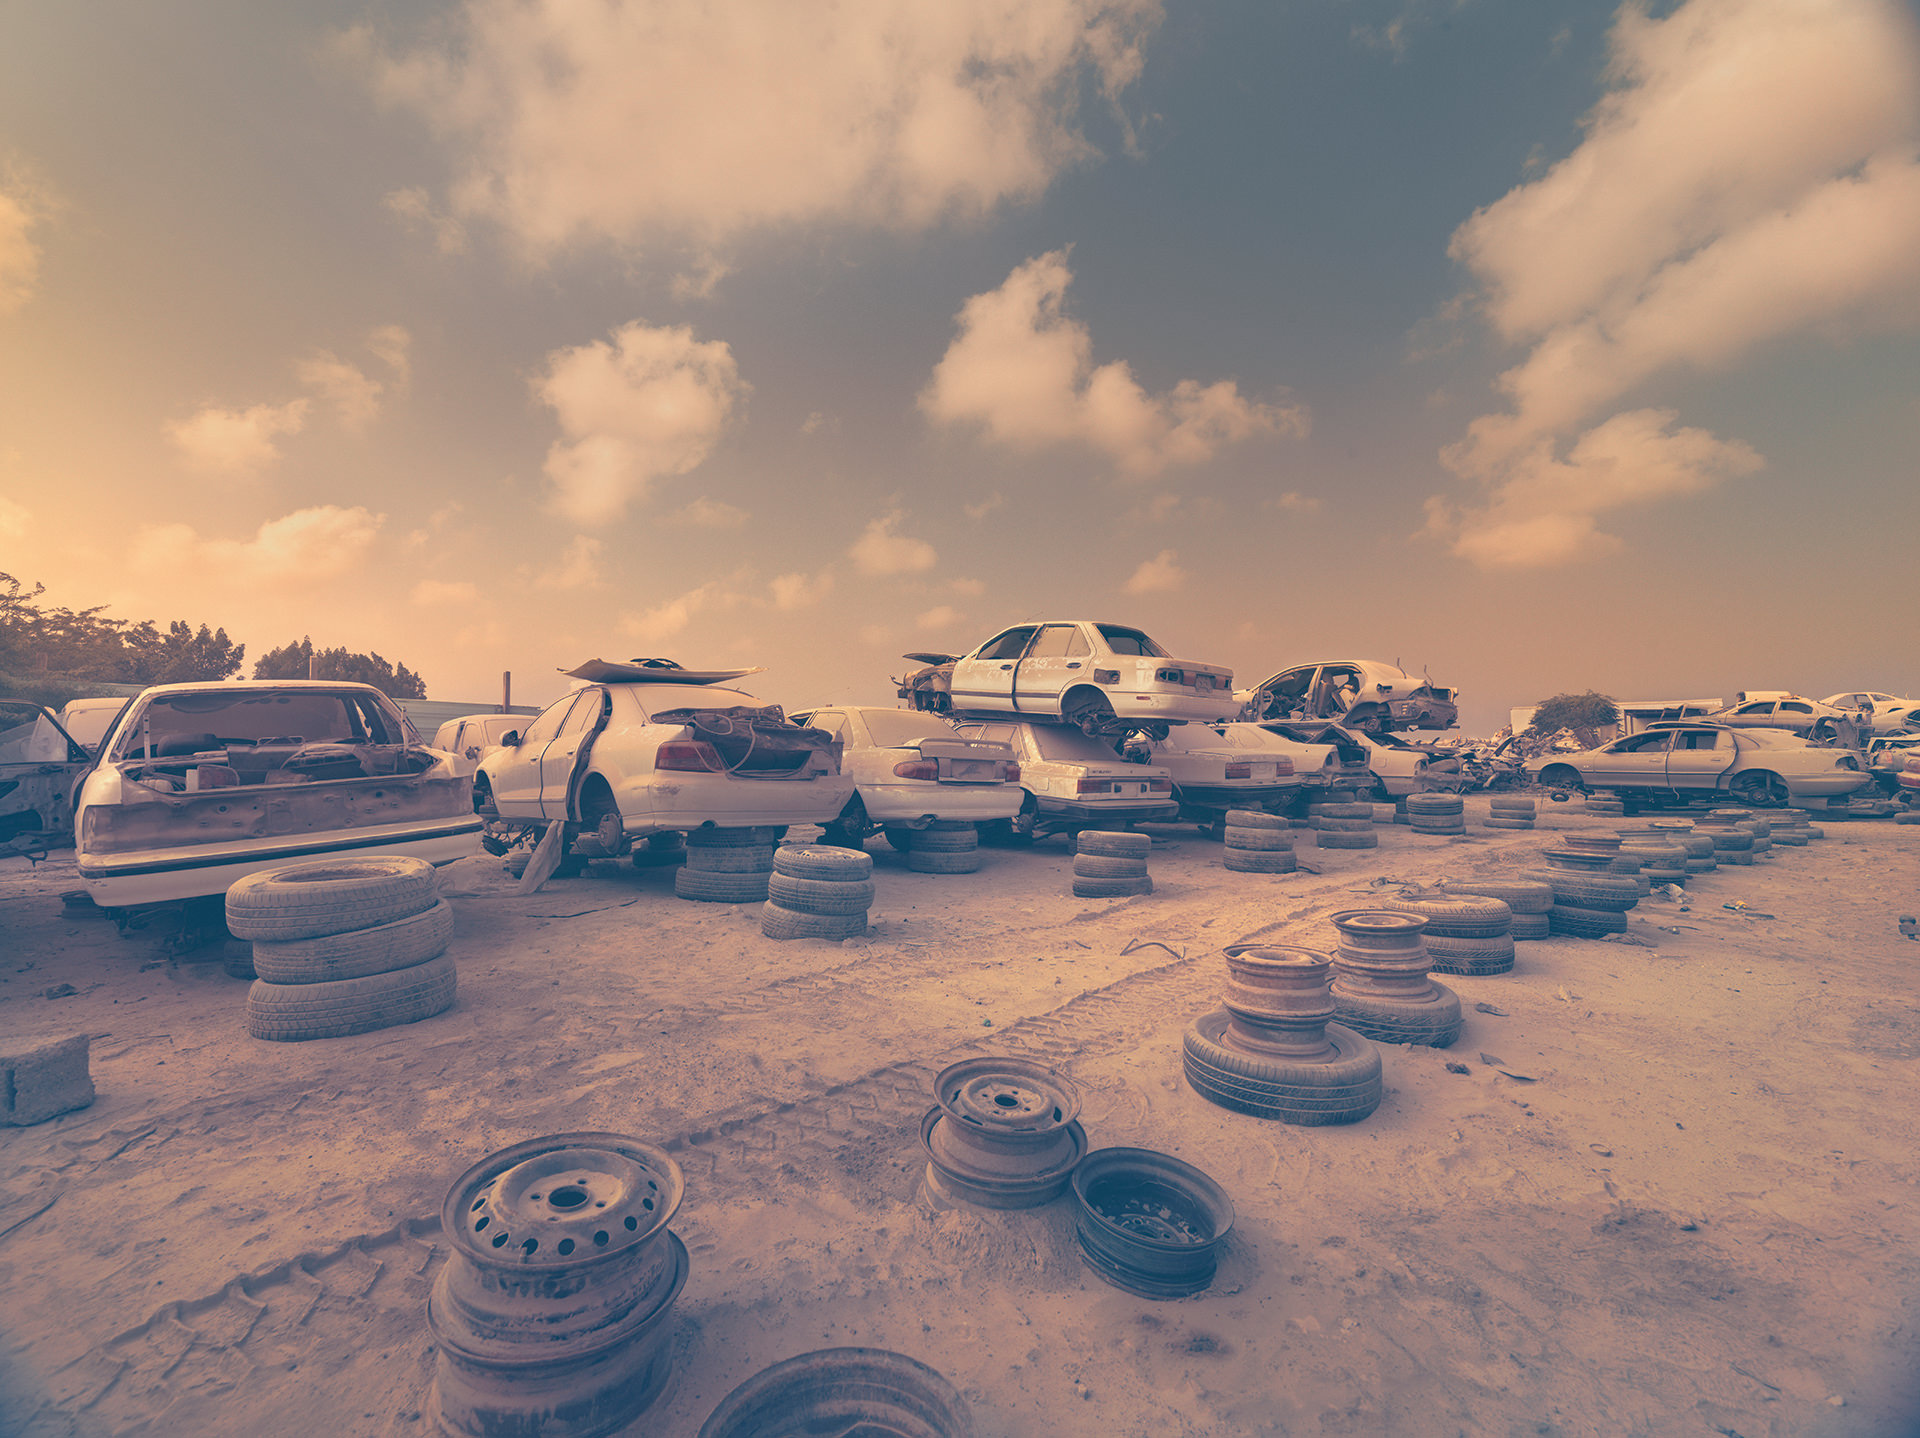 2014; bahrain; dust, junk yard, cars; transportation, old, anke luckmann